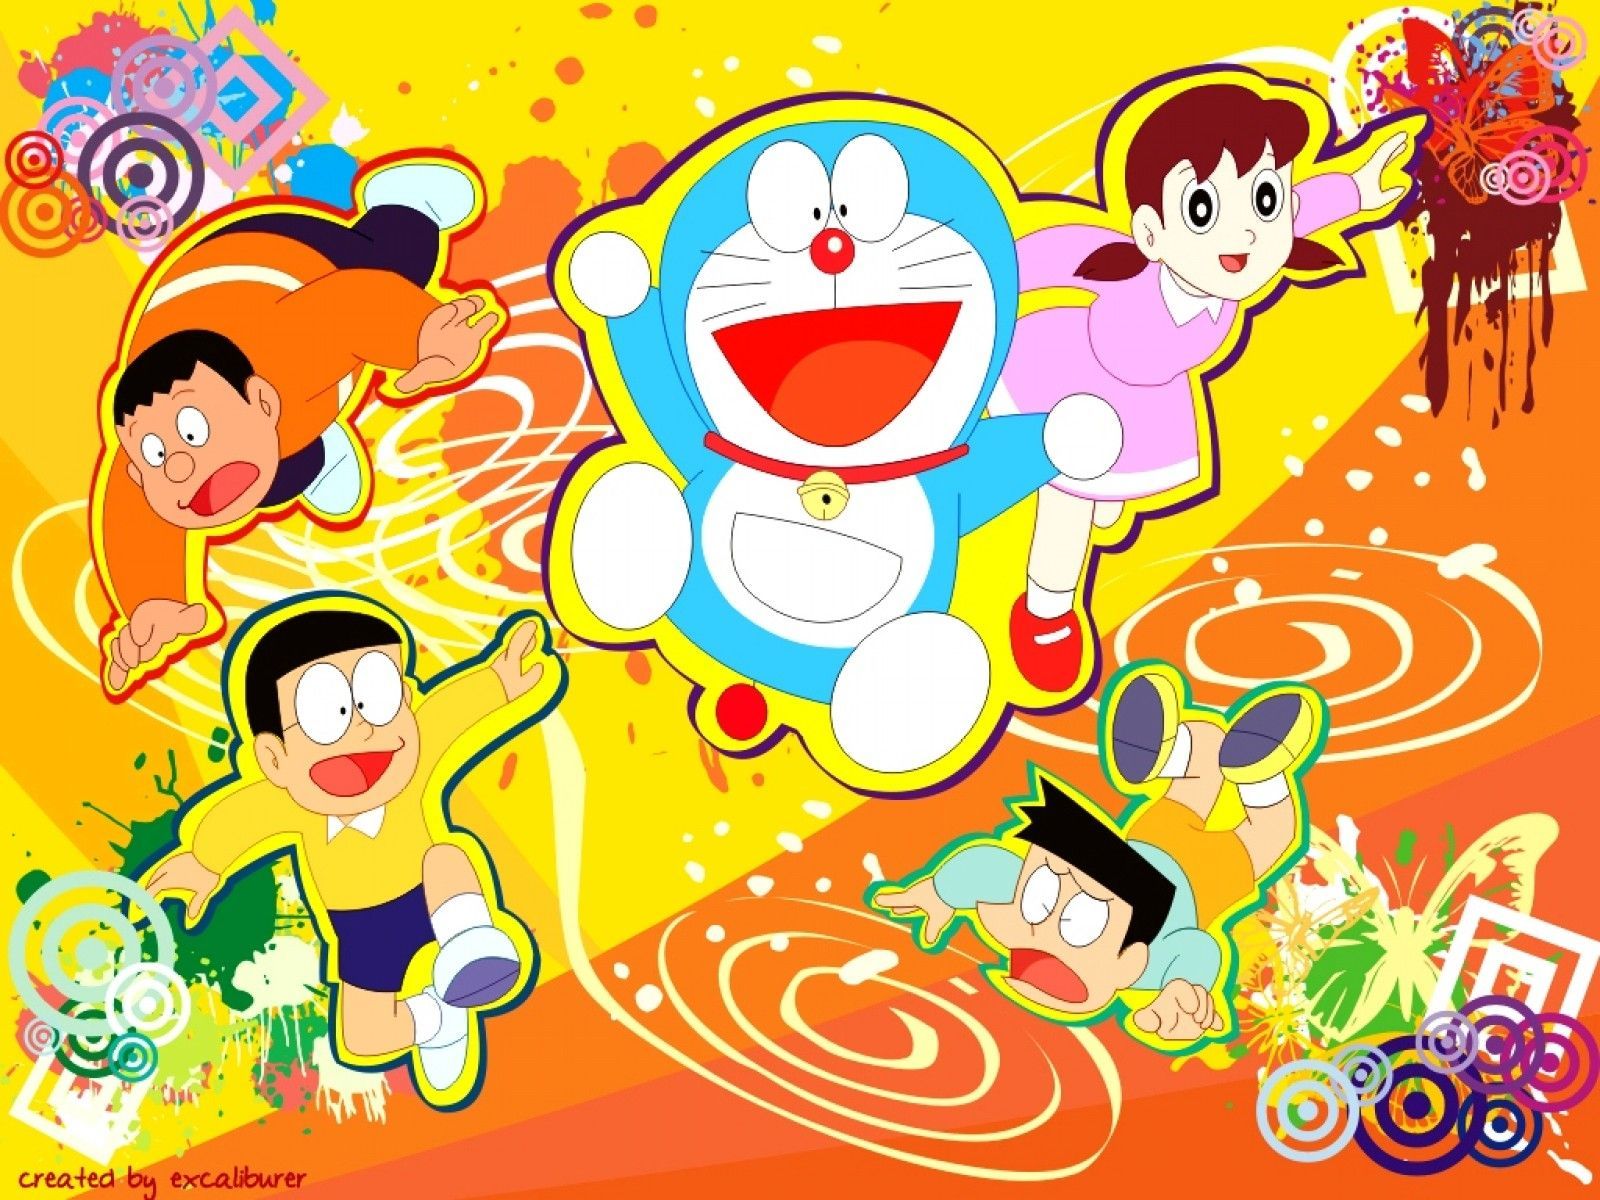 Doraemon HD Wallpaper For Mobile di 2020. Kartun, Doraemon